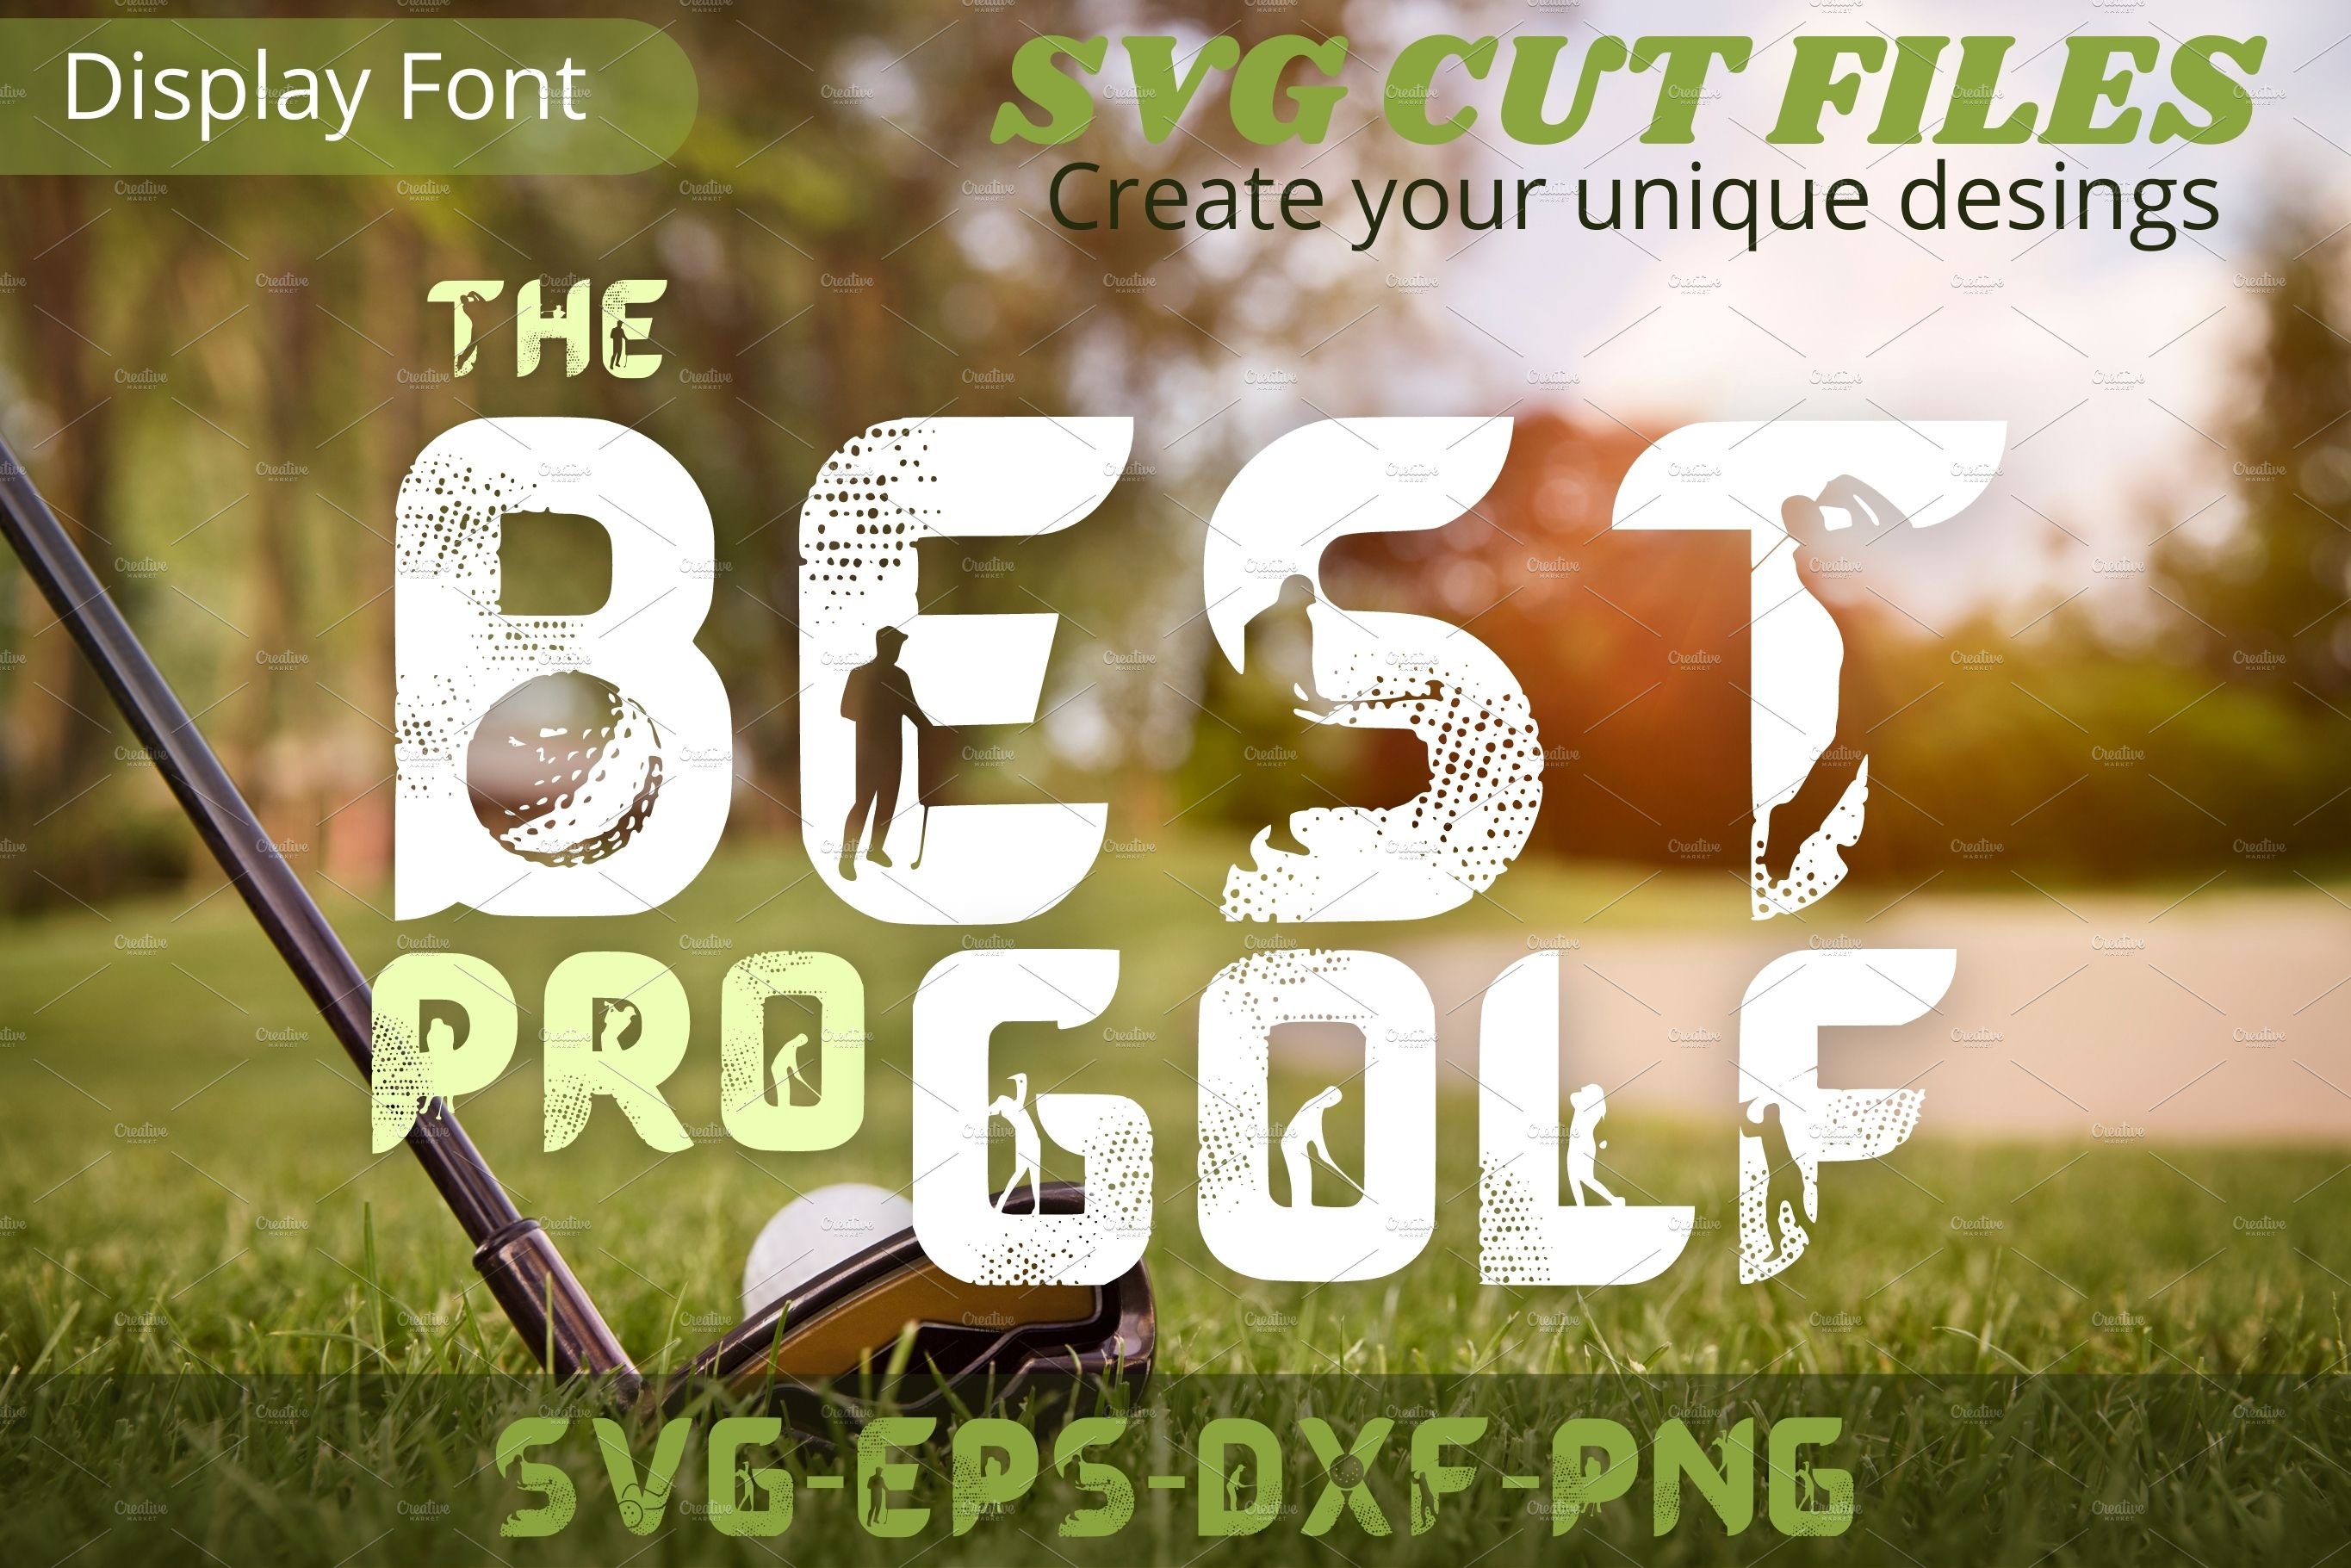 The Best Pro Golf Font, SVG cut file cover image.